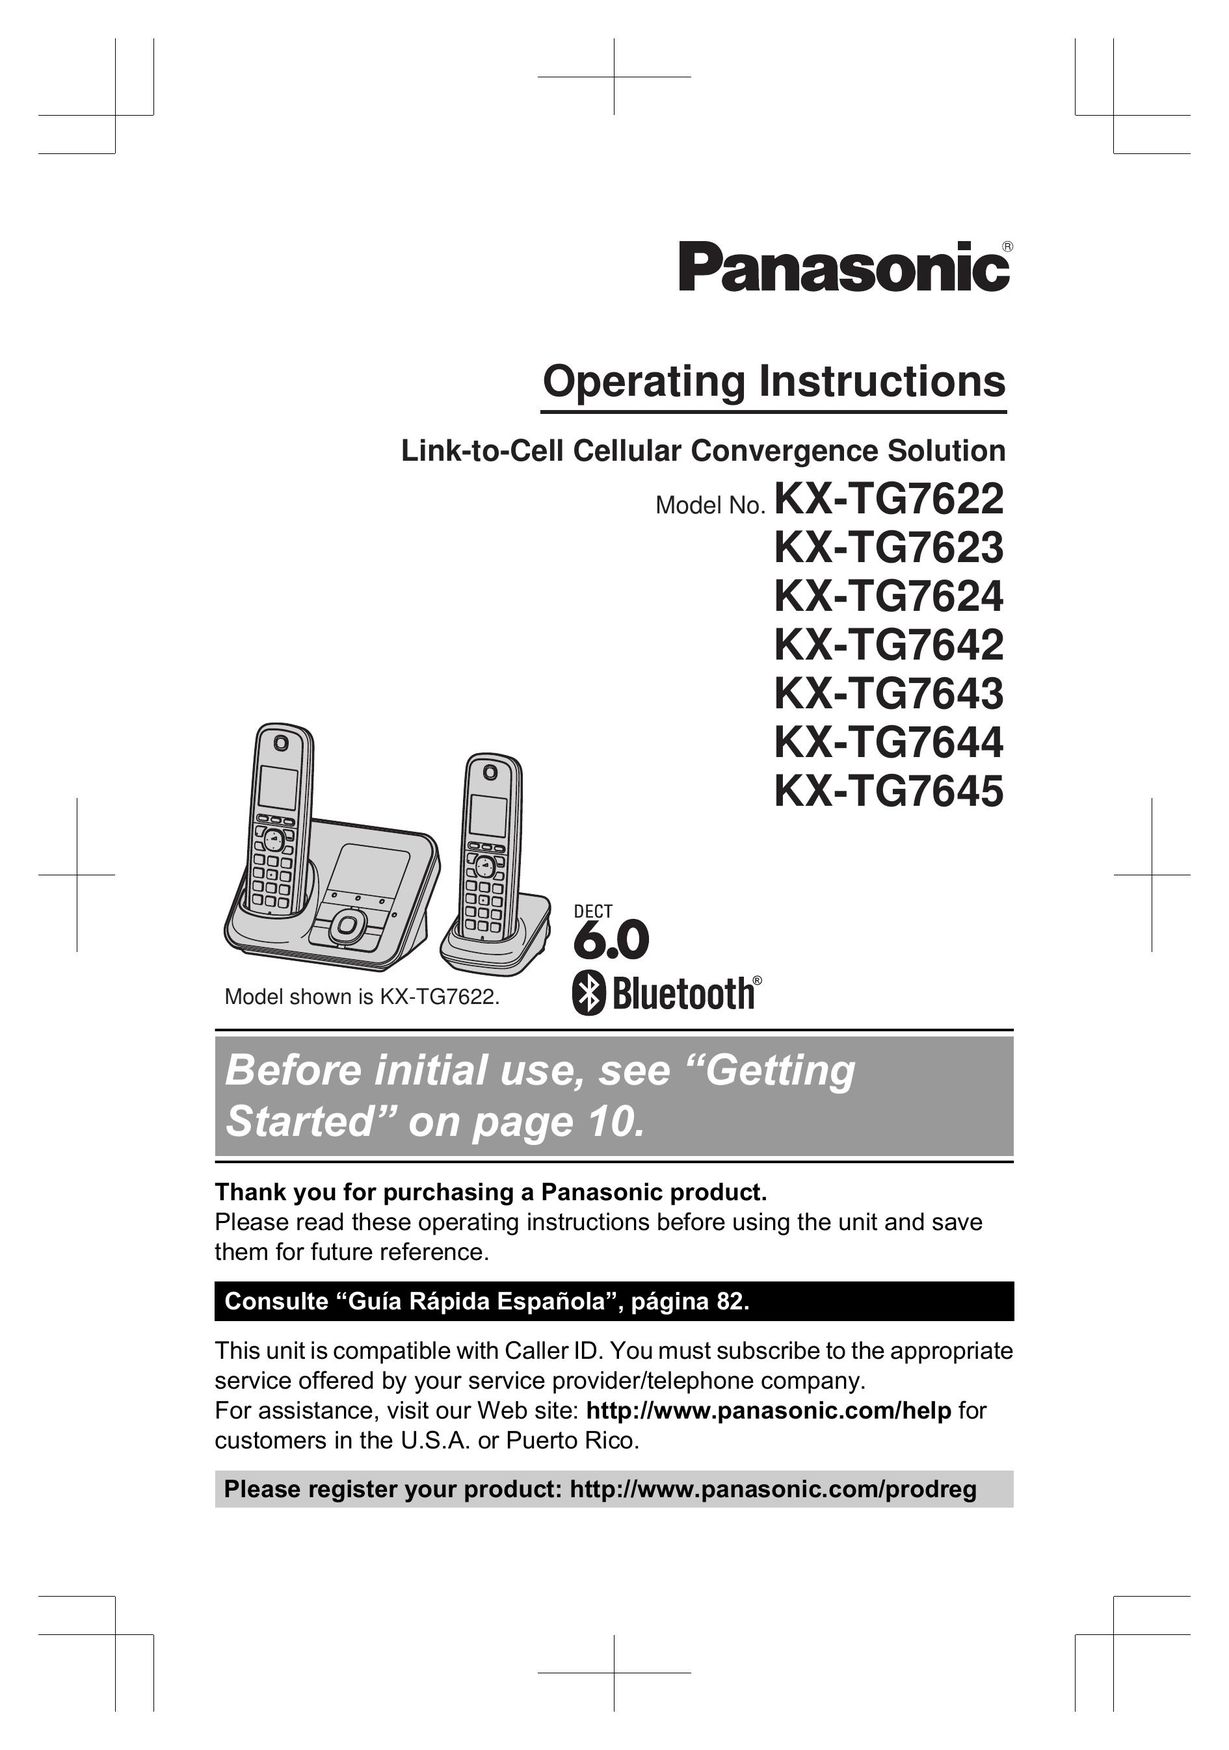 Panasonic KX-TG7643 Bluetooth Headset User Manual